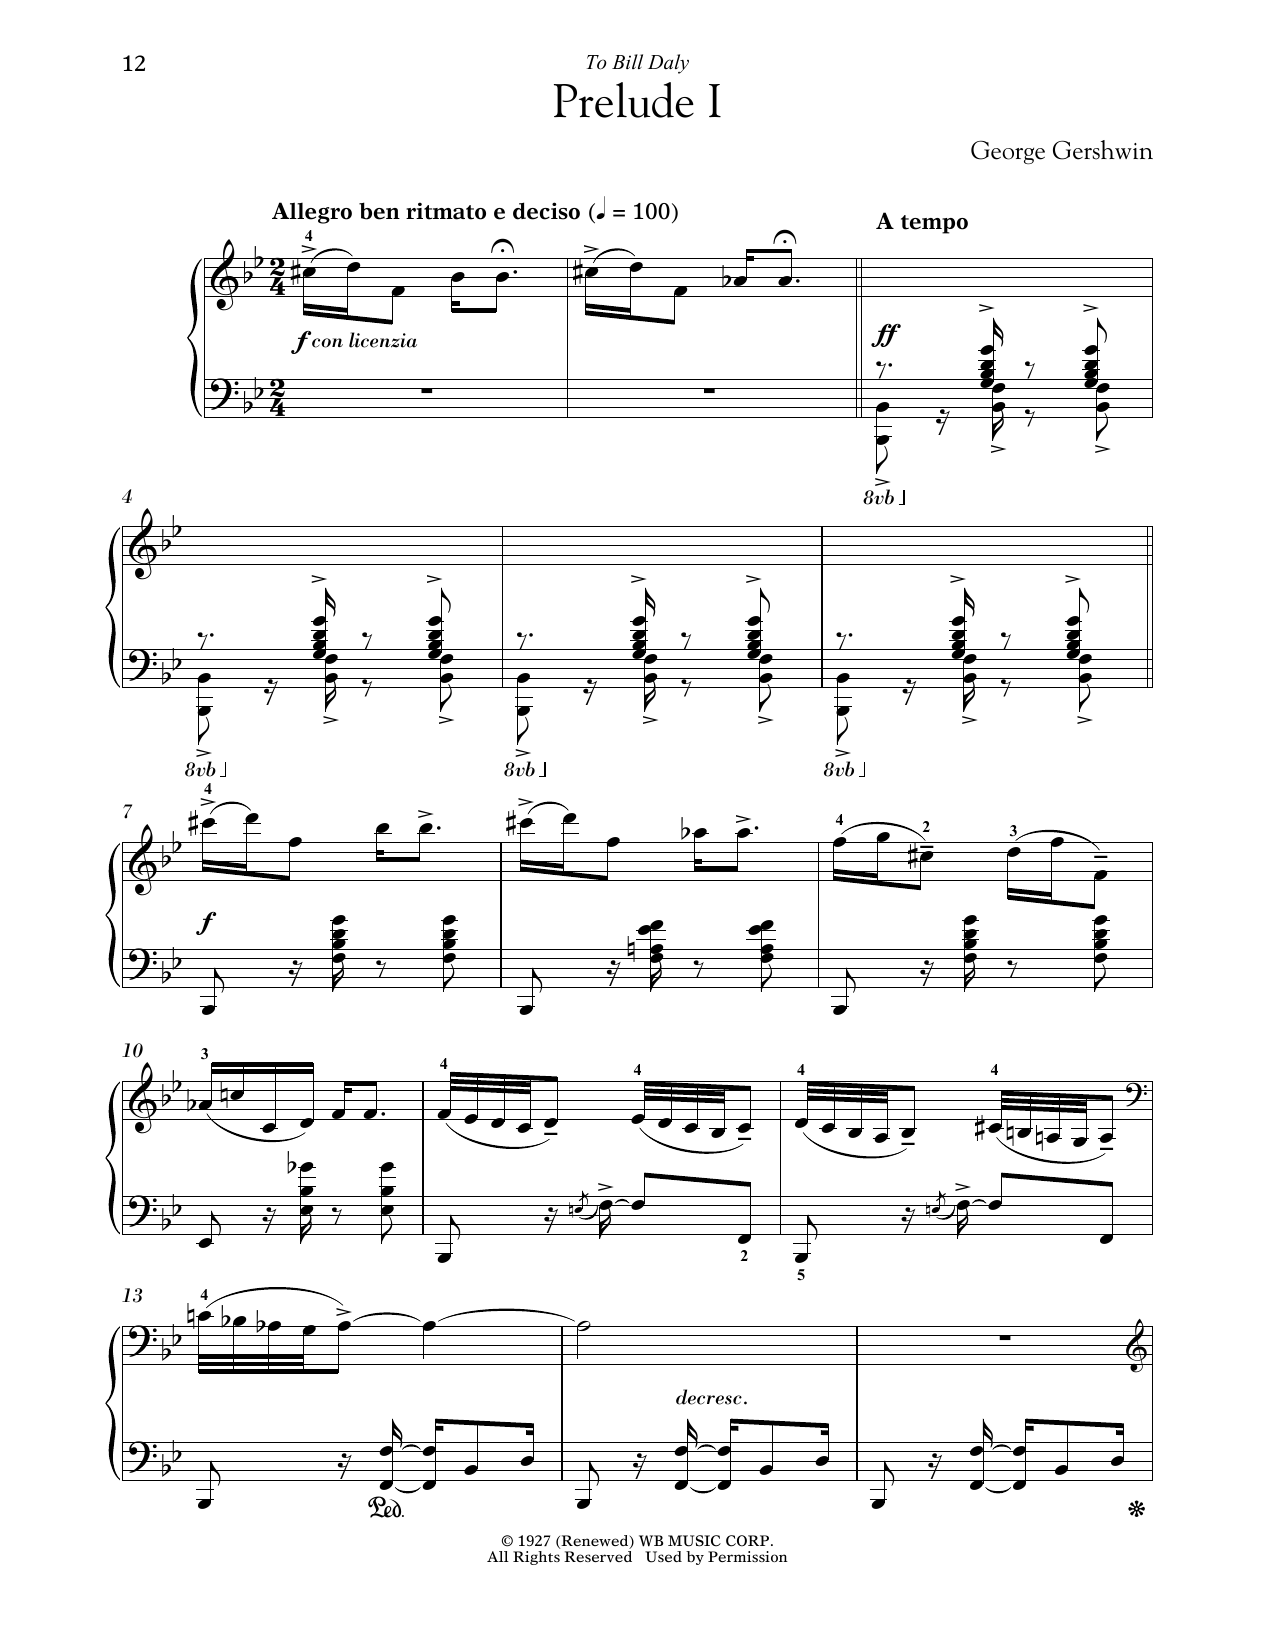 George Gershwin Prelude I (Allegro Ben Ritmato E Deciso) Sheet Music Notes & Chords for Piano Solo - Download or Print PDF